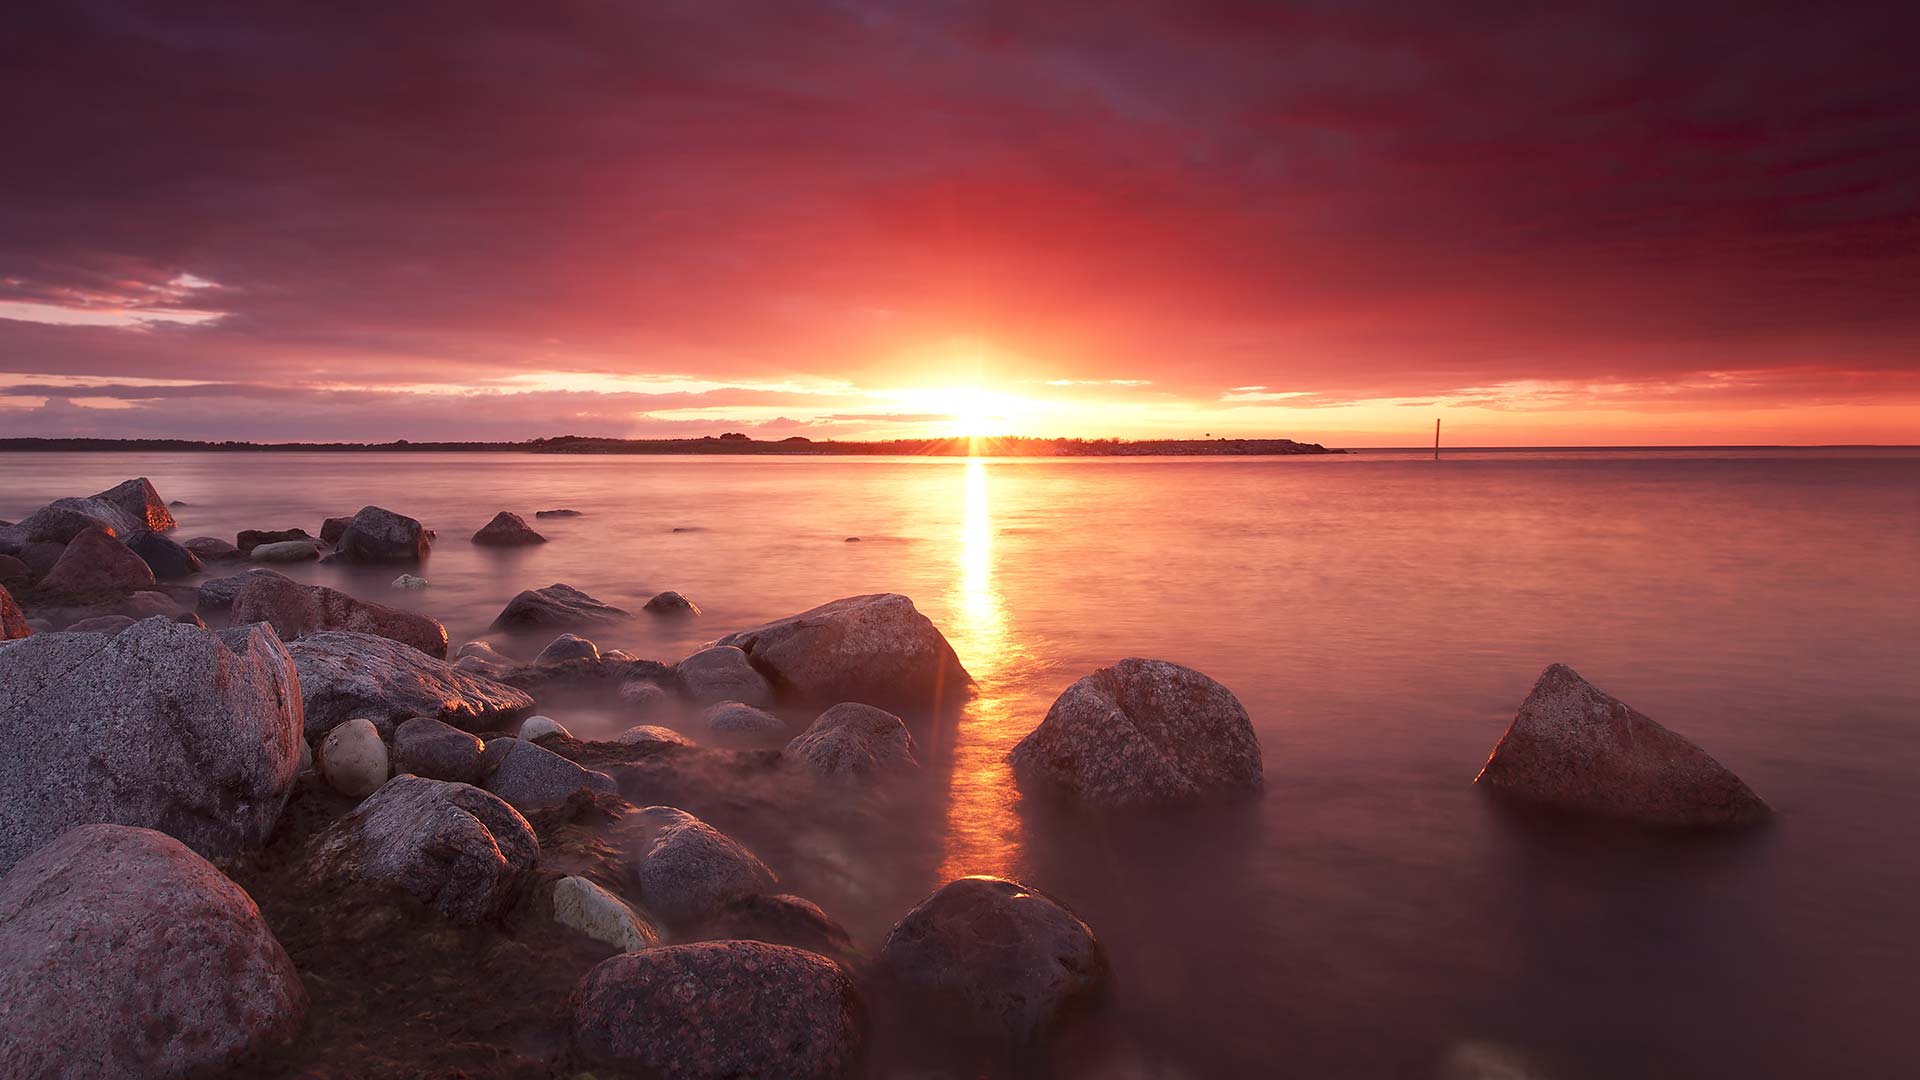 The sun on the horizon in Swedish Lapland